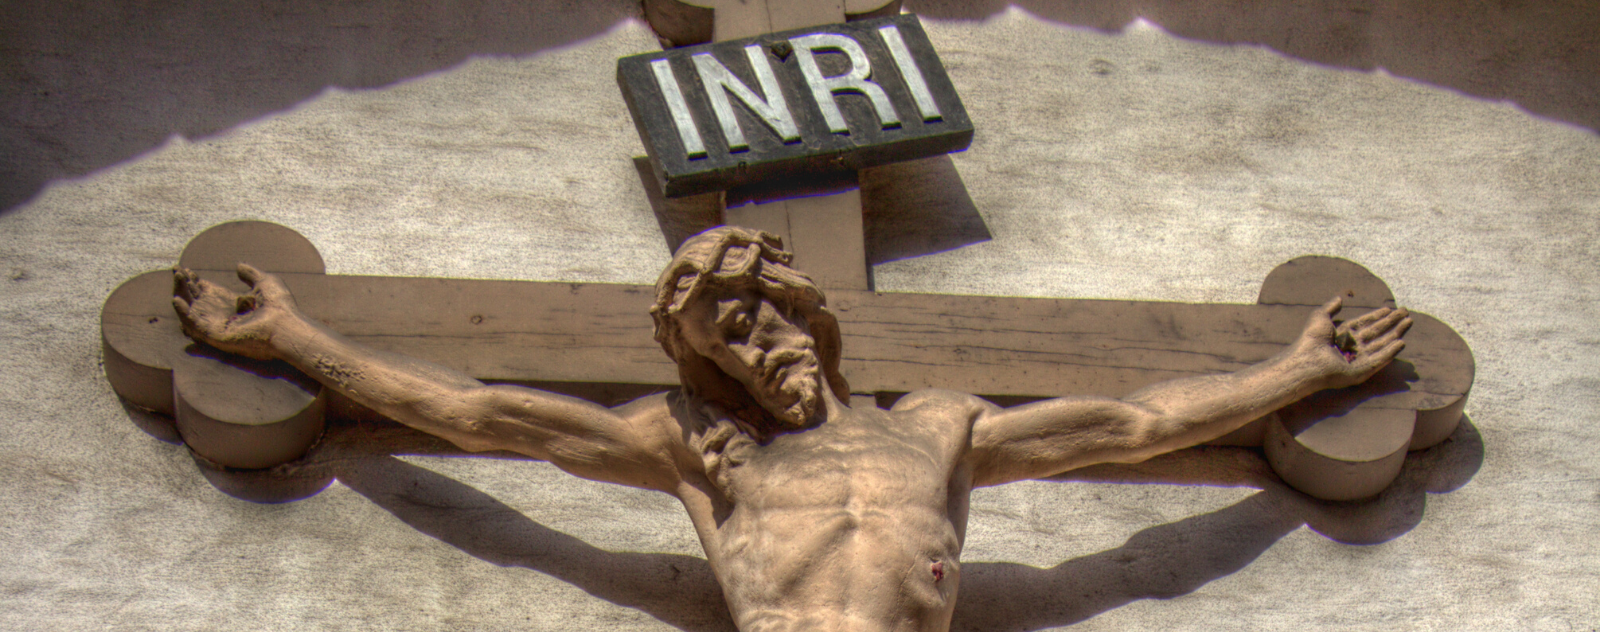 inri abbreviation on the cross